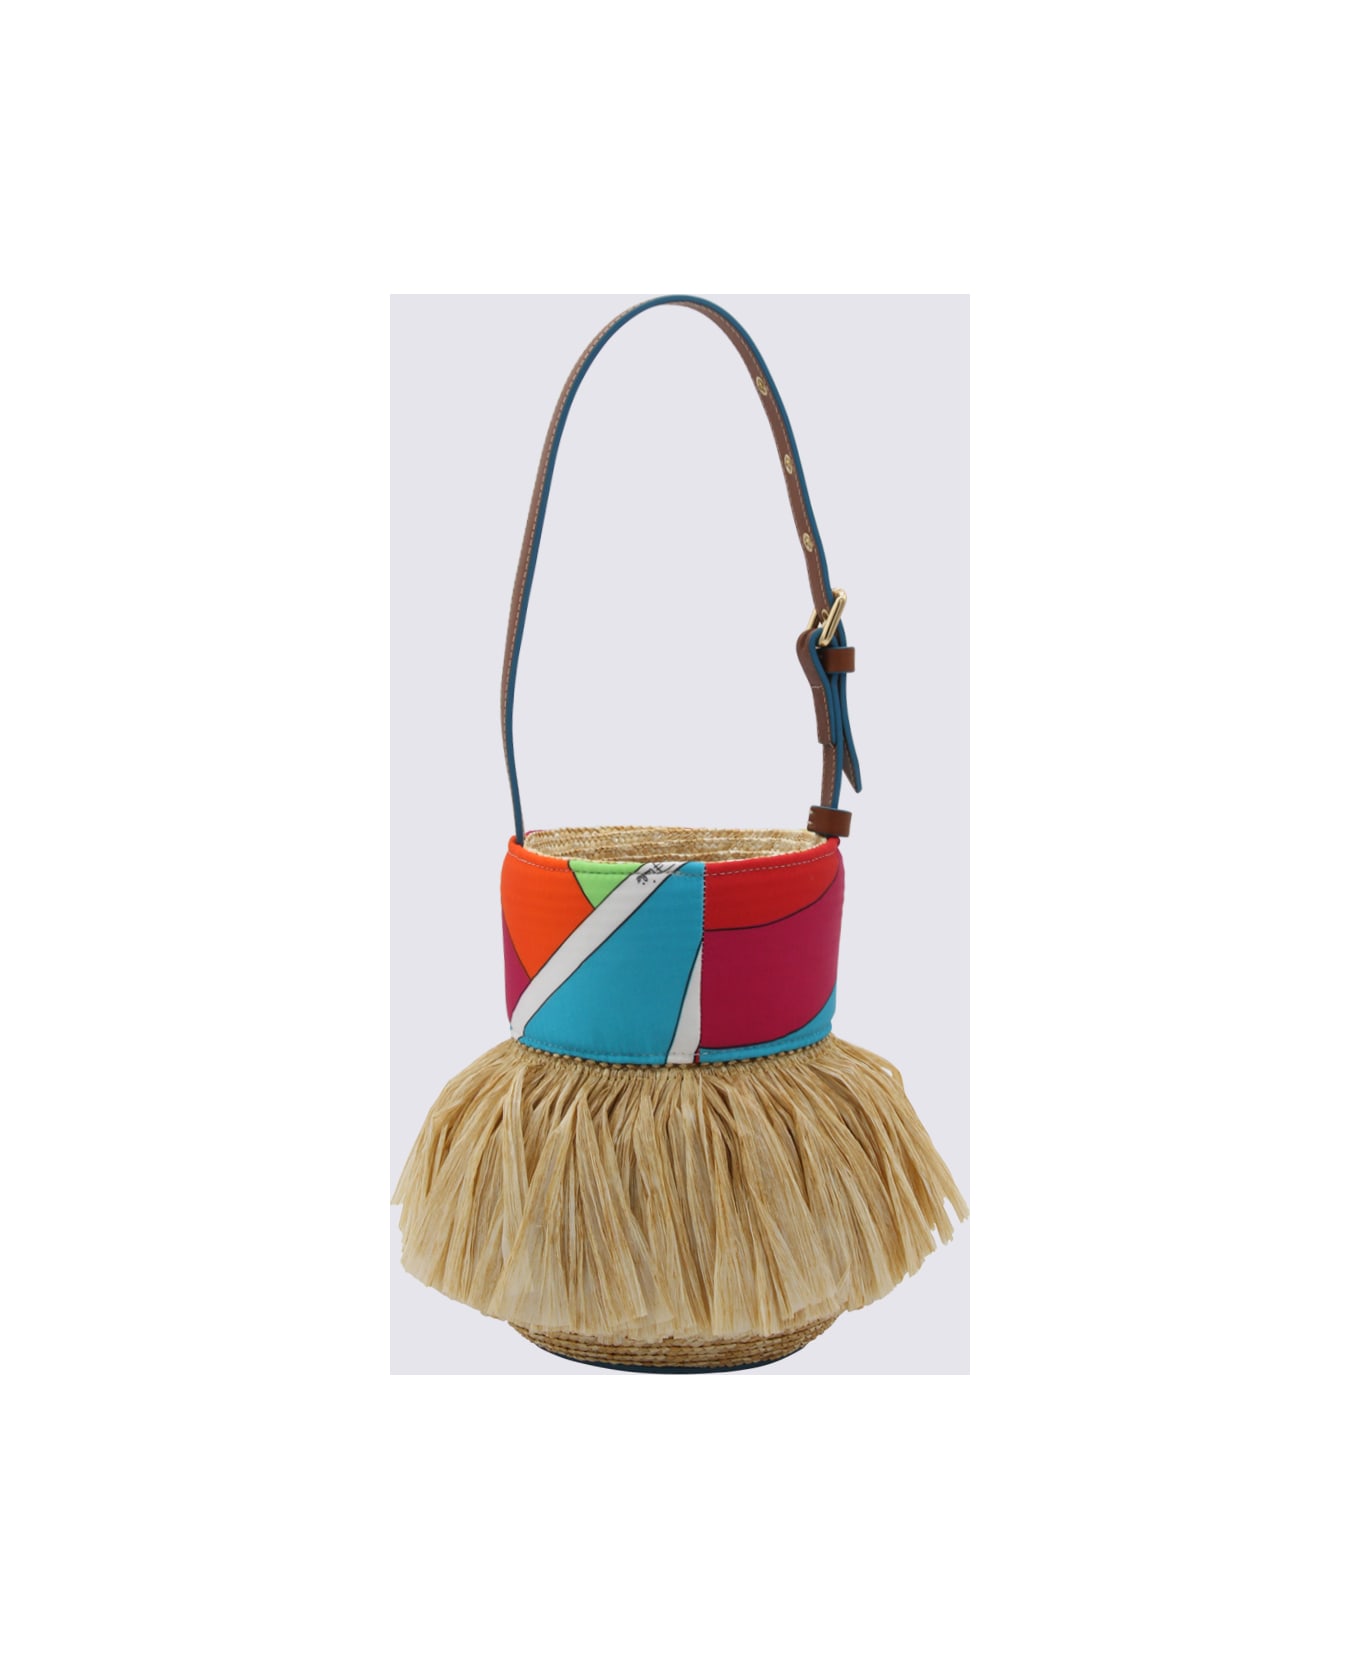 Pucci Multicolor Puccinella Bag - NATURAL+ARANCIO/FUXI ショルダーバッグ